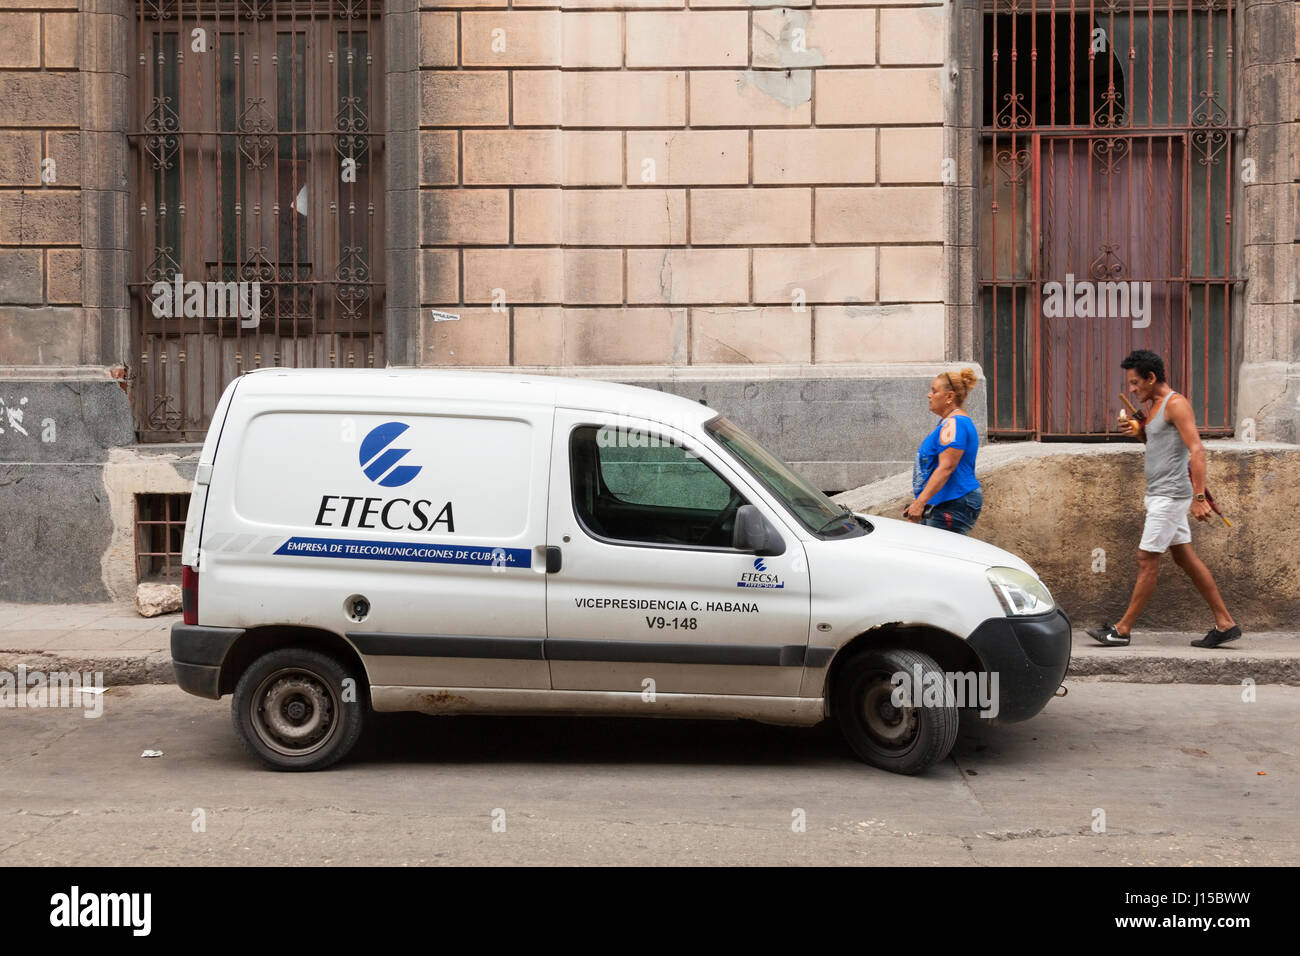 An Etecsa telecommunications vehicle in Havana, Cuba. Stock Photo